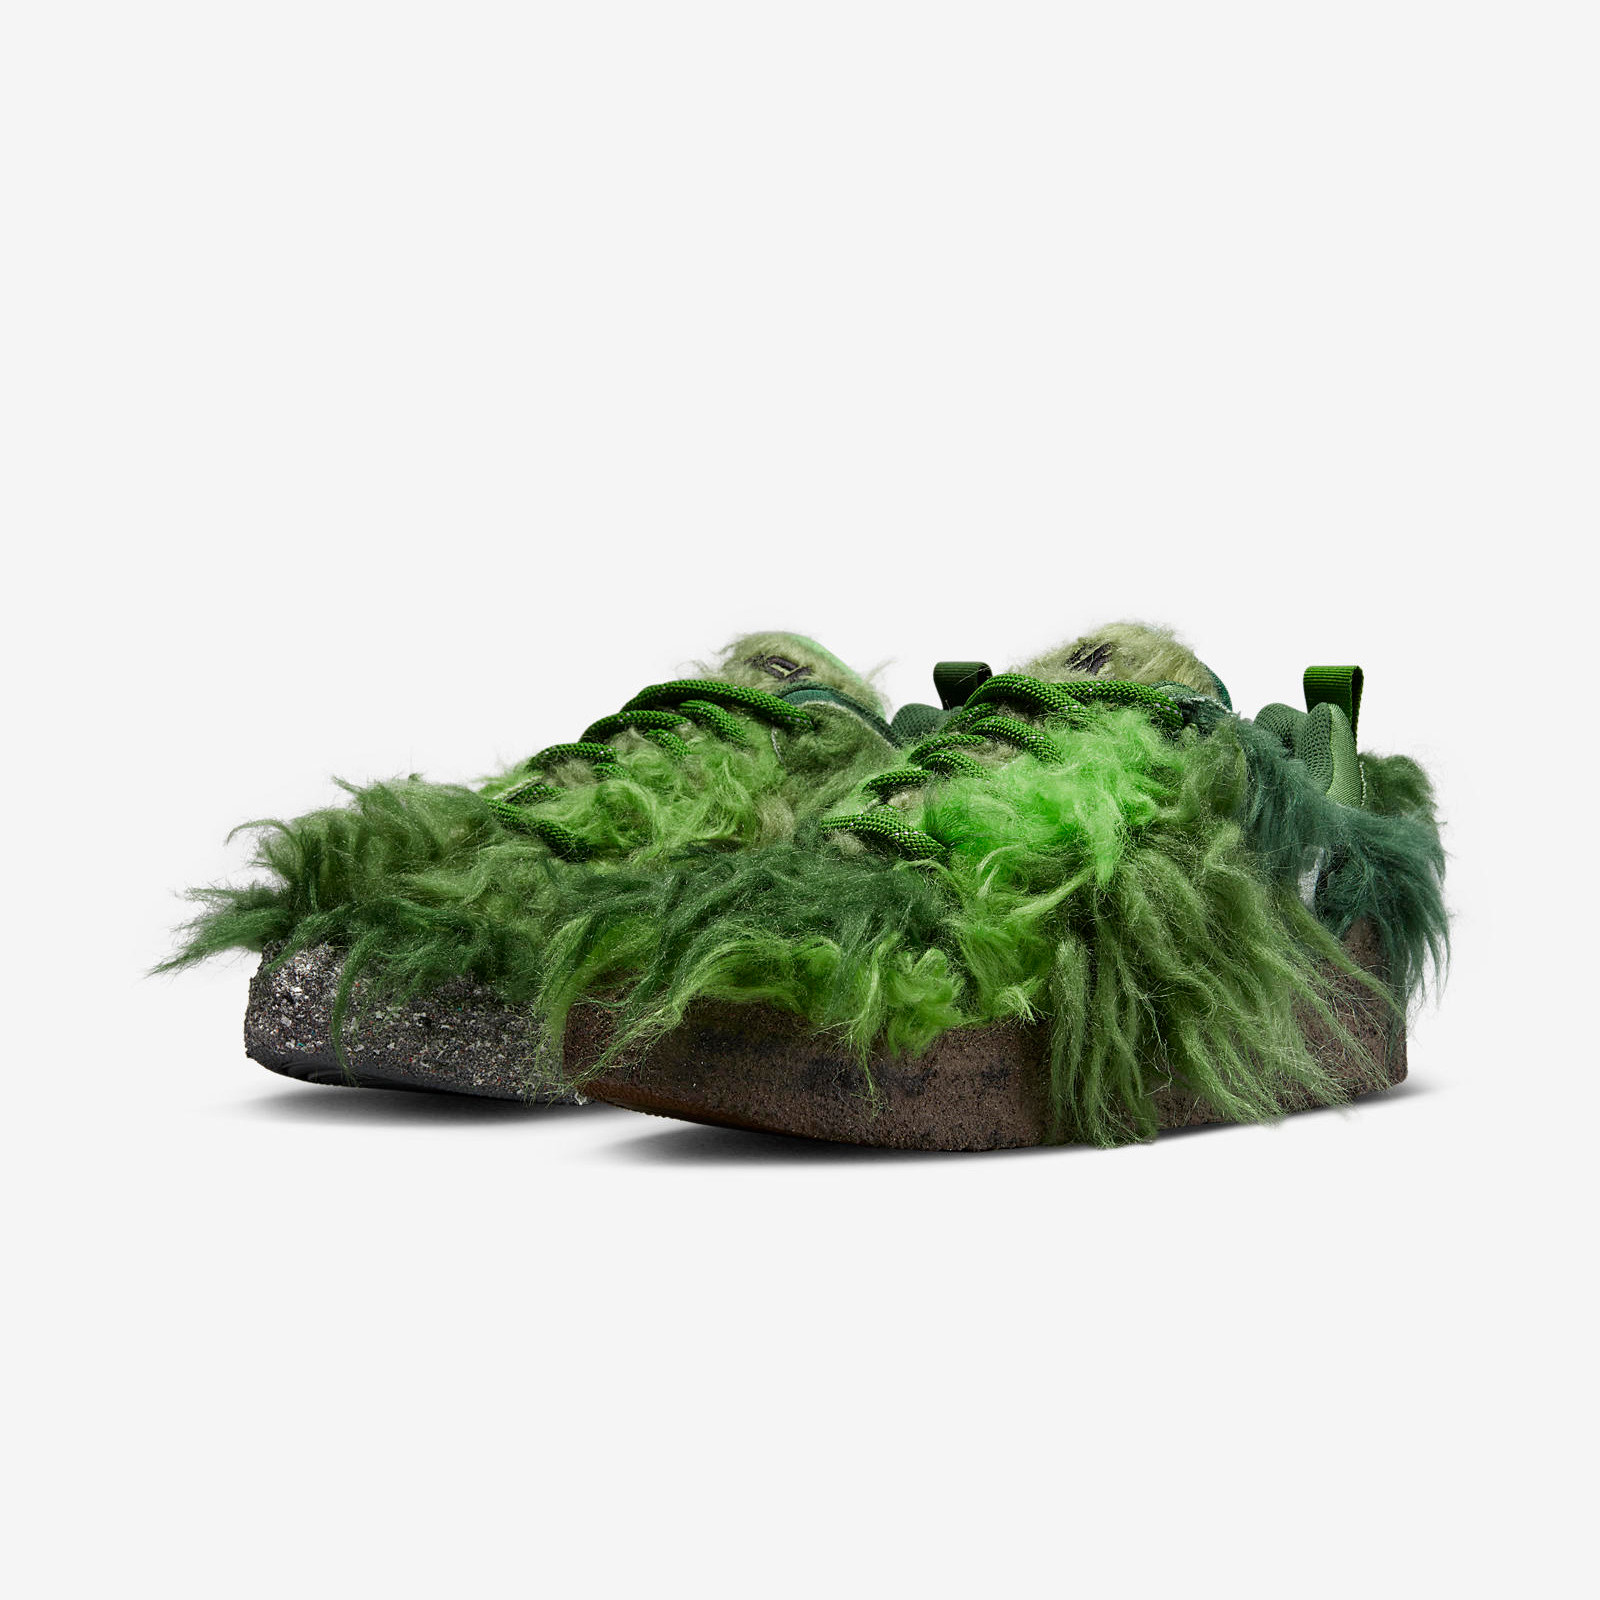 Cactus Plant Flea Market
Nike Flea 1
« Forest Green »